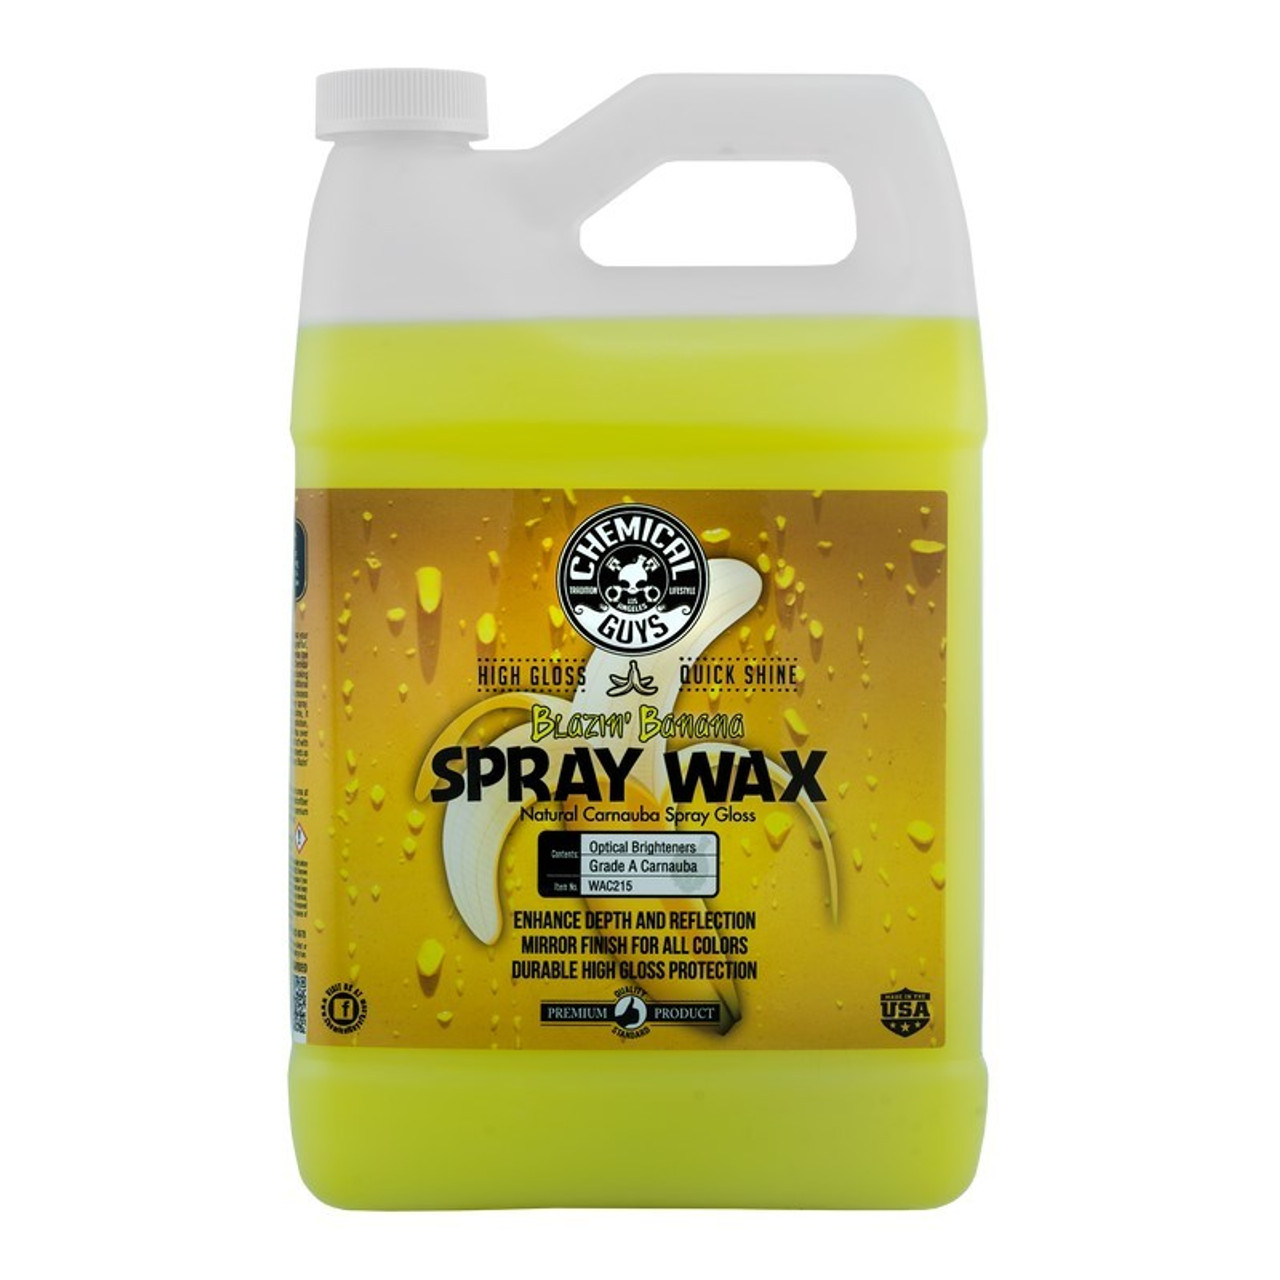 Chemical Guys Sudpreme Wash & Wax Extreme Shine Foaming Car Wash and Wax  Soap, 64oz 